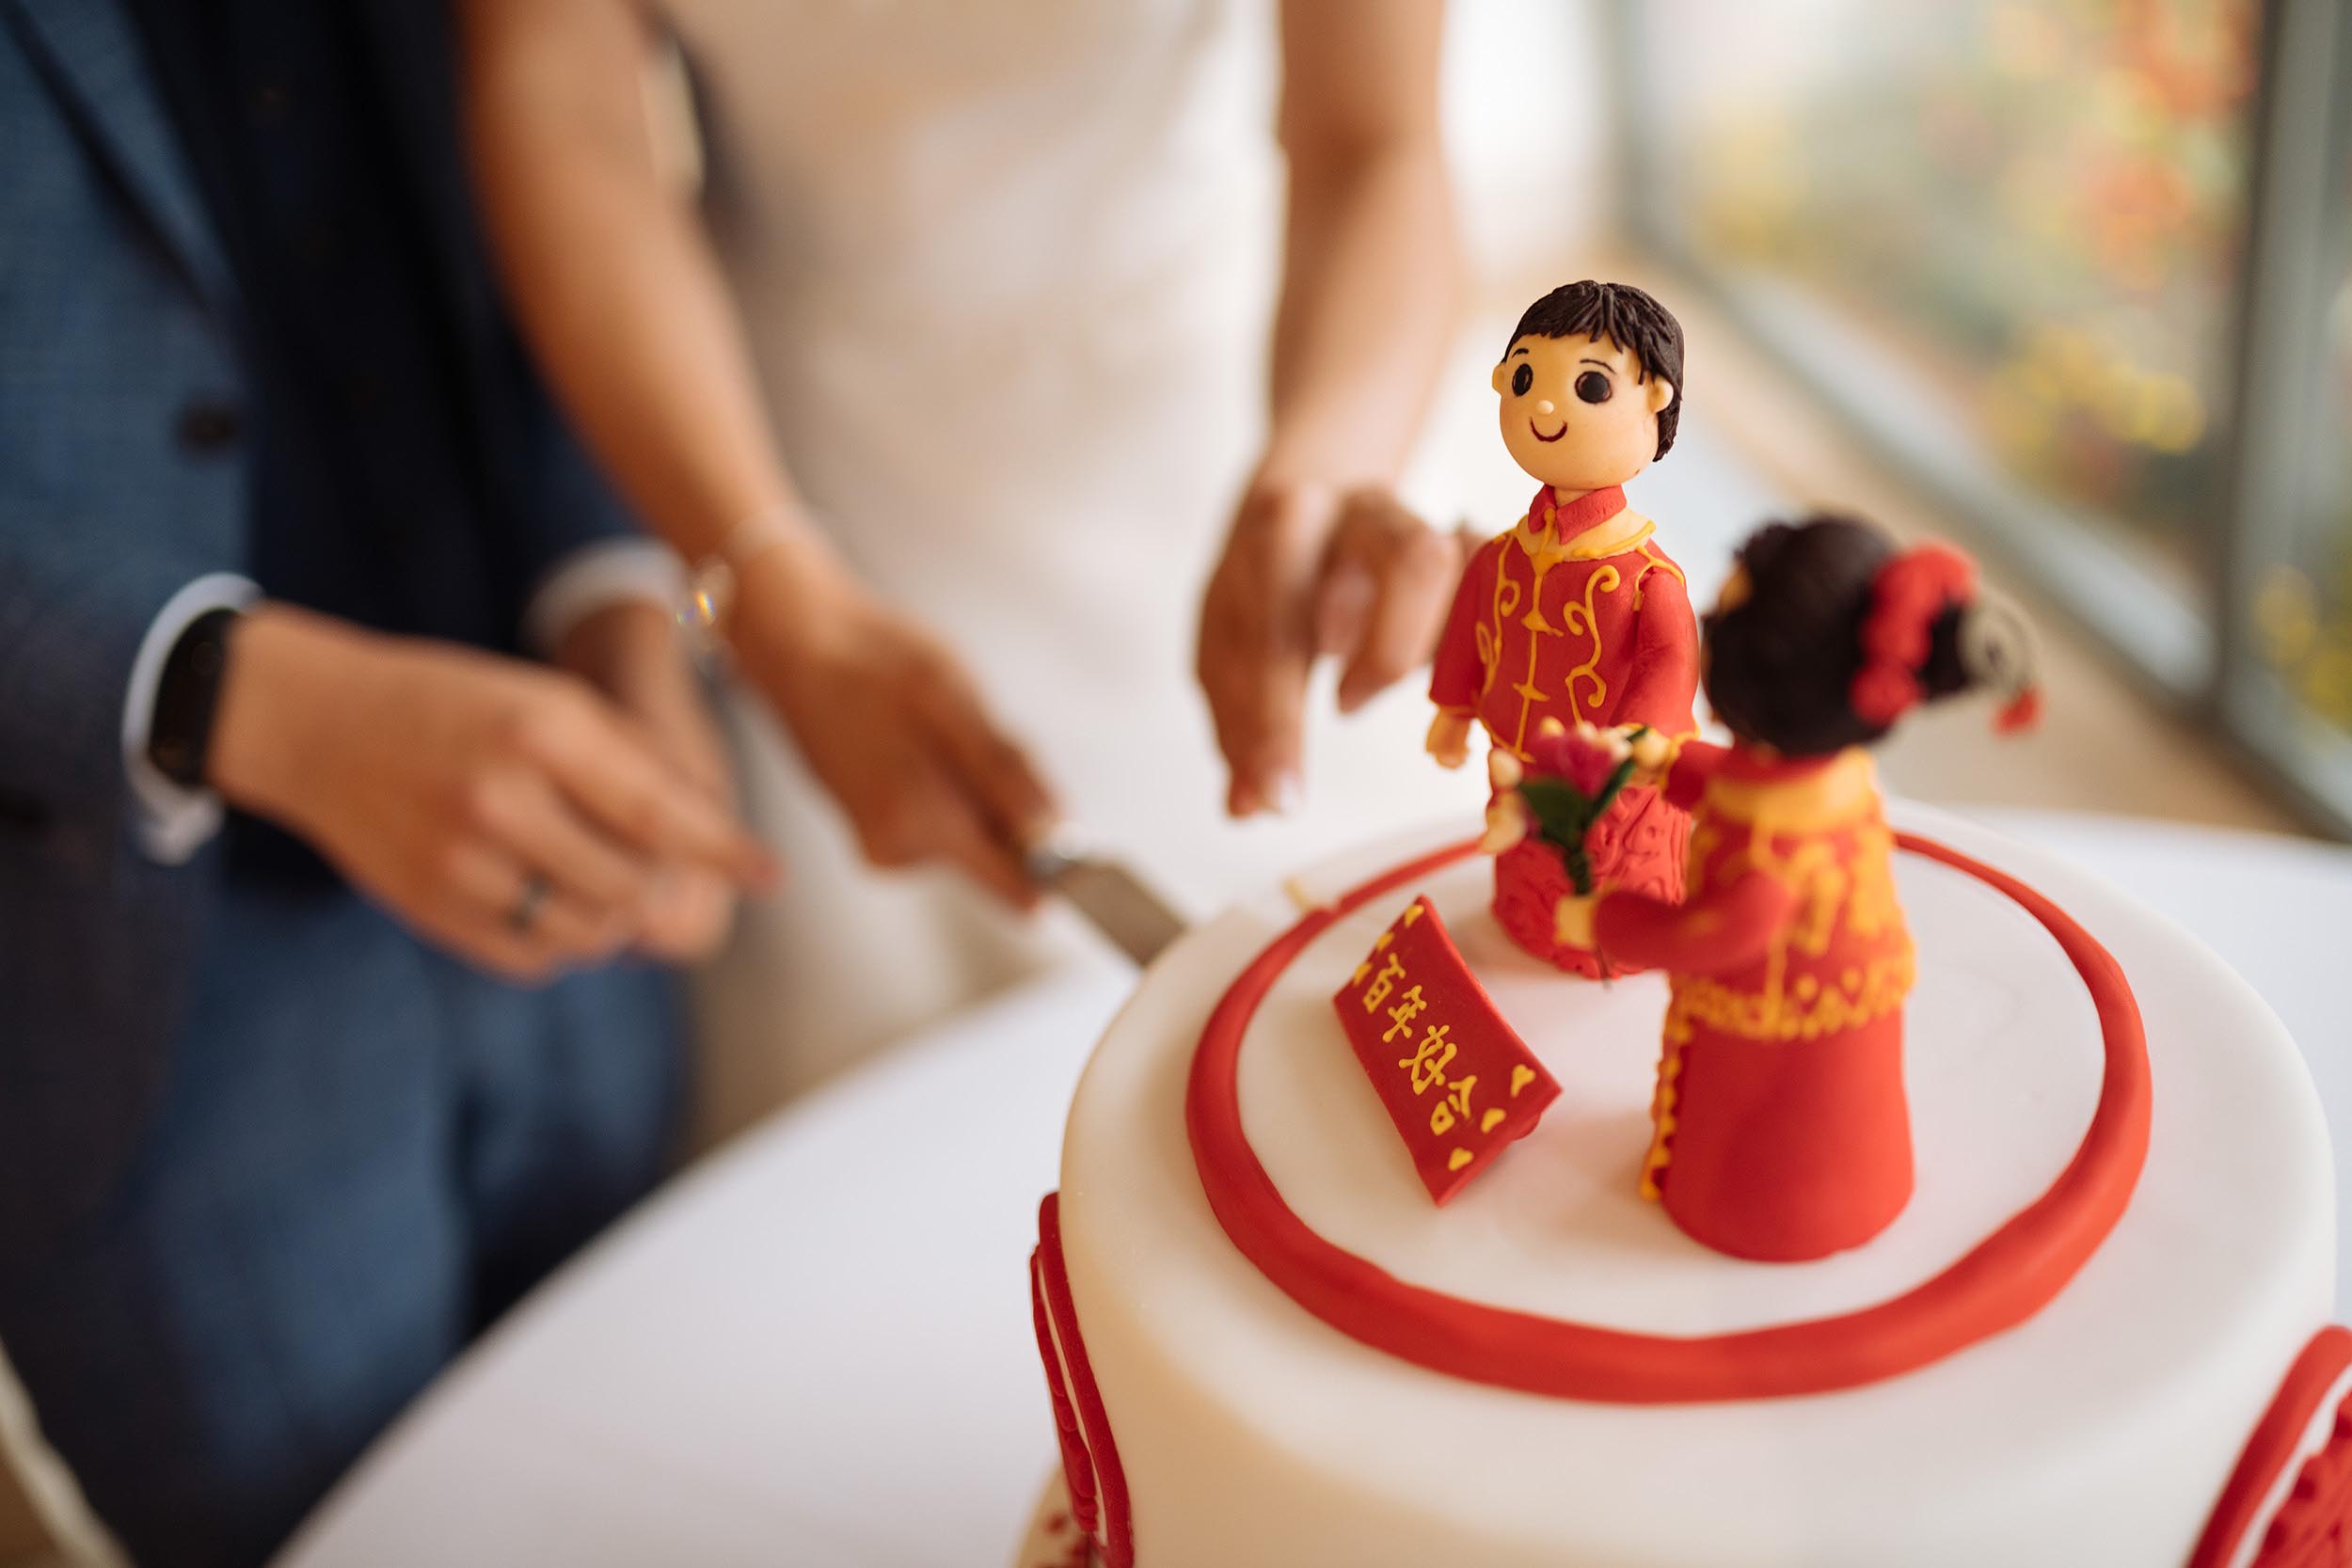 stella-clem-chinese-tradition-wedding-cake